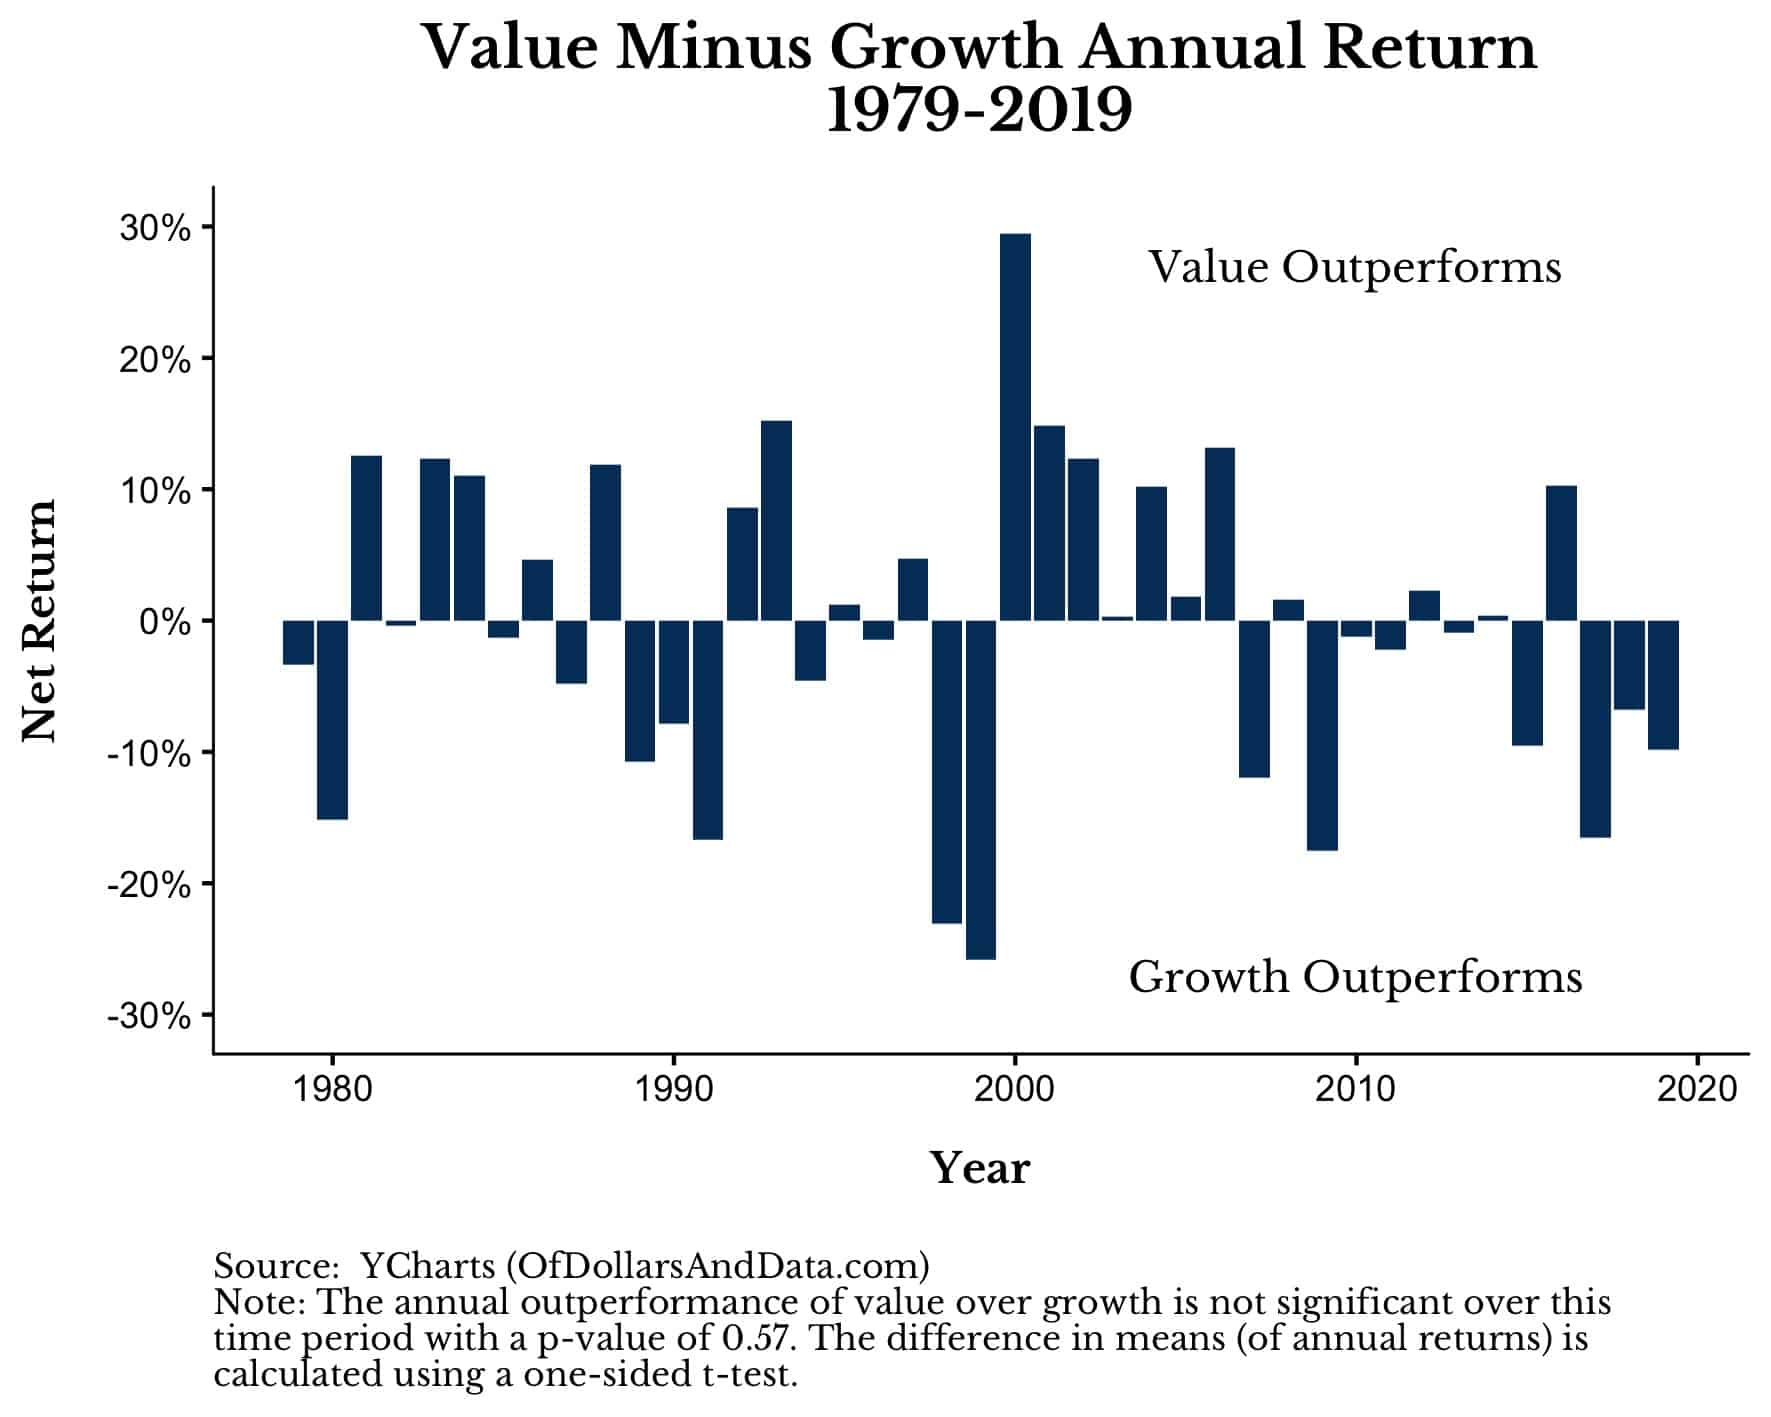 Value minus growth annual returns 1979-2019